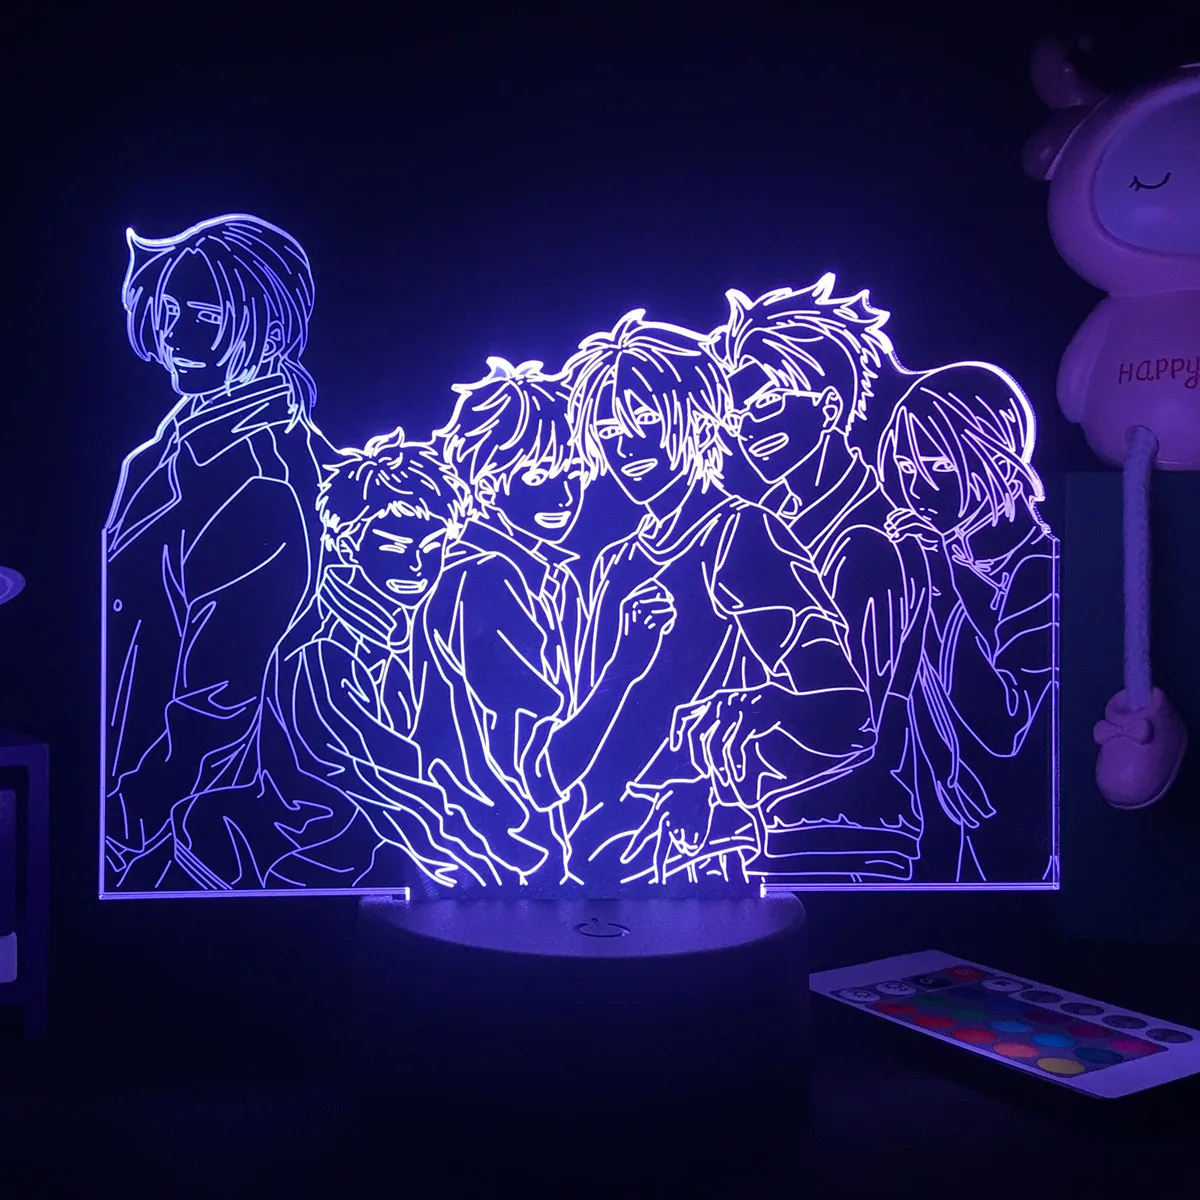 

Funny Japan Anime Banana Fish Nightlight 3D Remote Control Desk Lamp Child Xmas Birthday Gifts Dropshipping